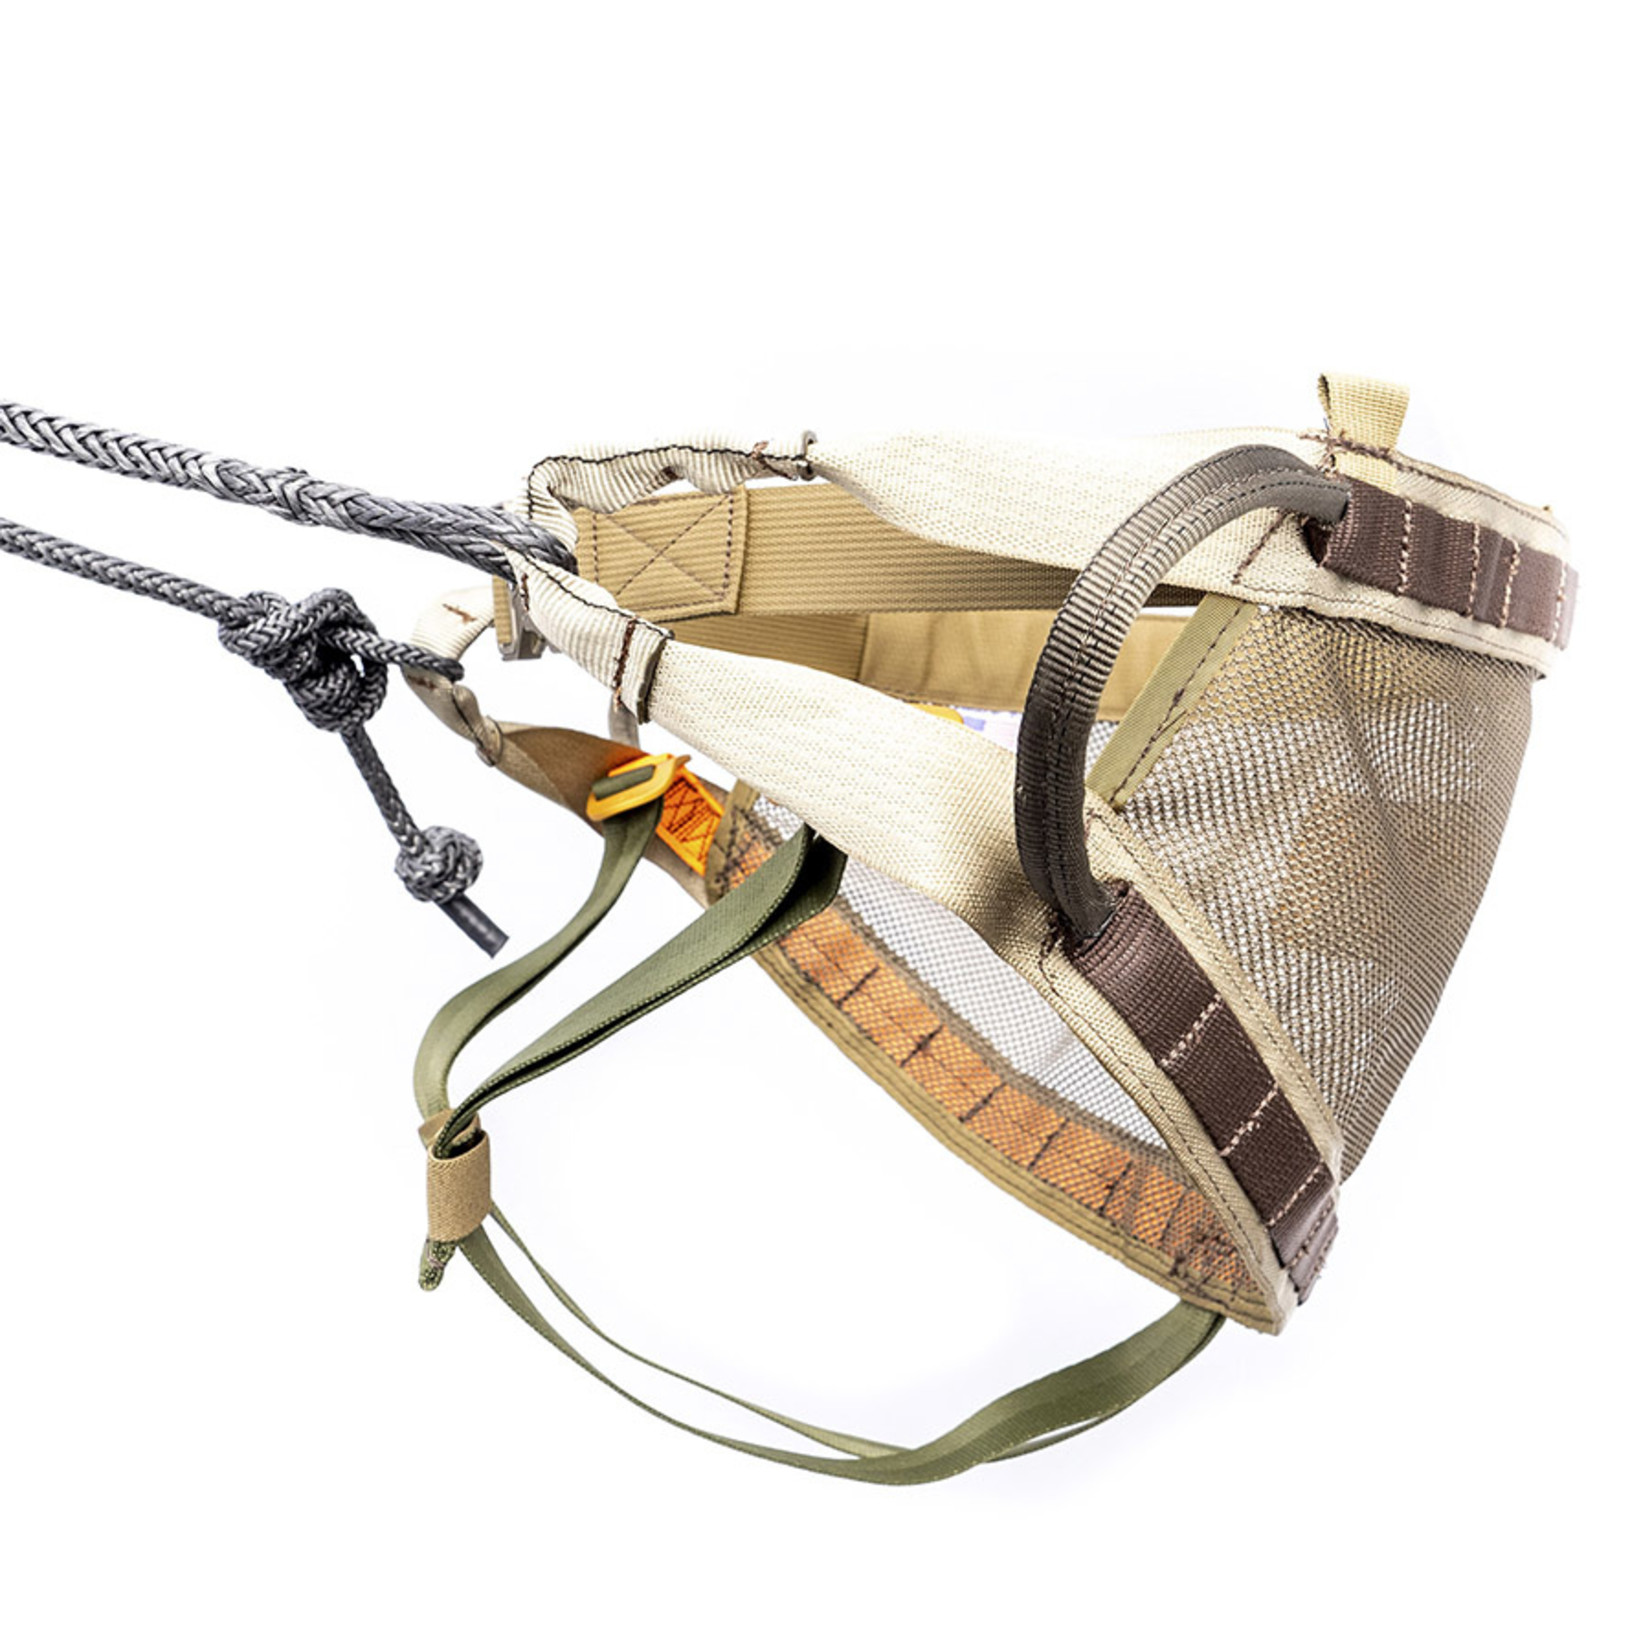 Tethrd Phantom Starter Saddle Kit (includes 11mm ropes and carabiners)